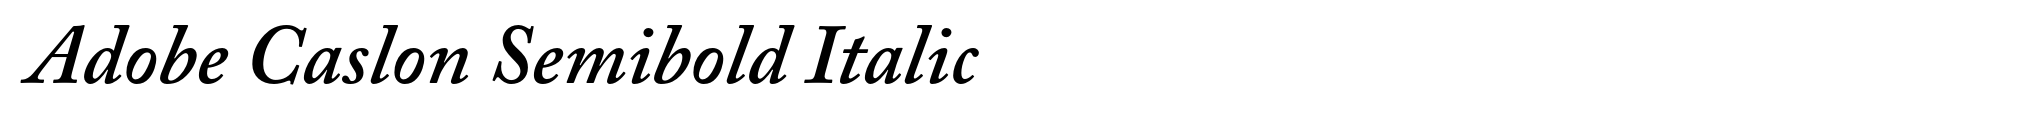 Adobe Caslon Semibold Italic image